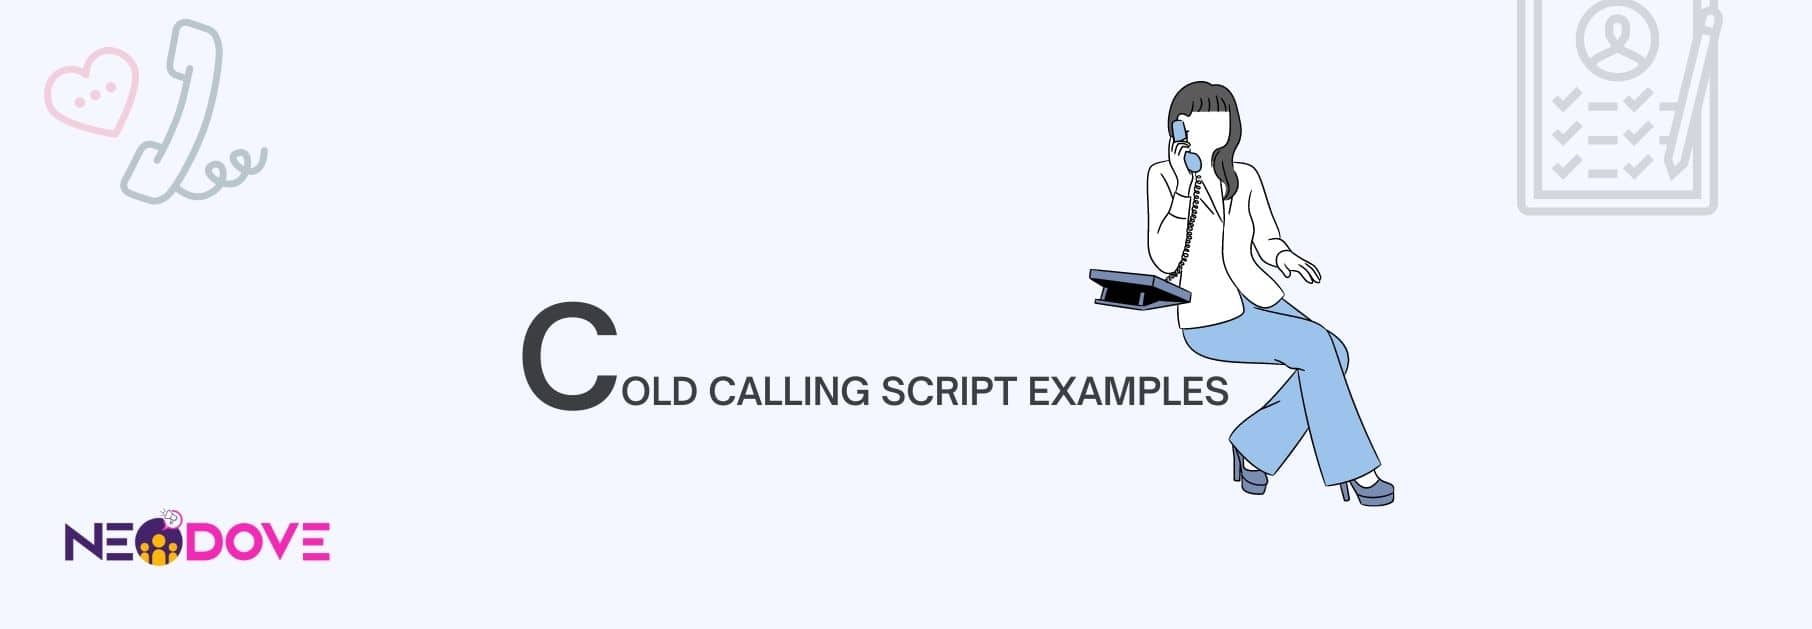 cold calling script examples